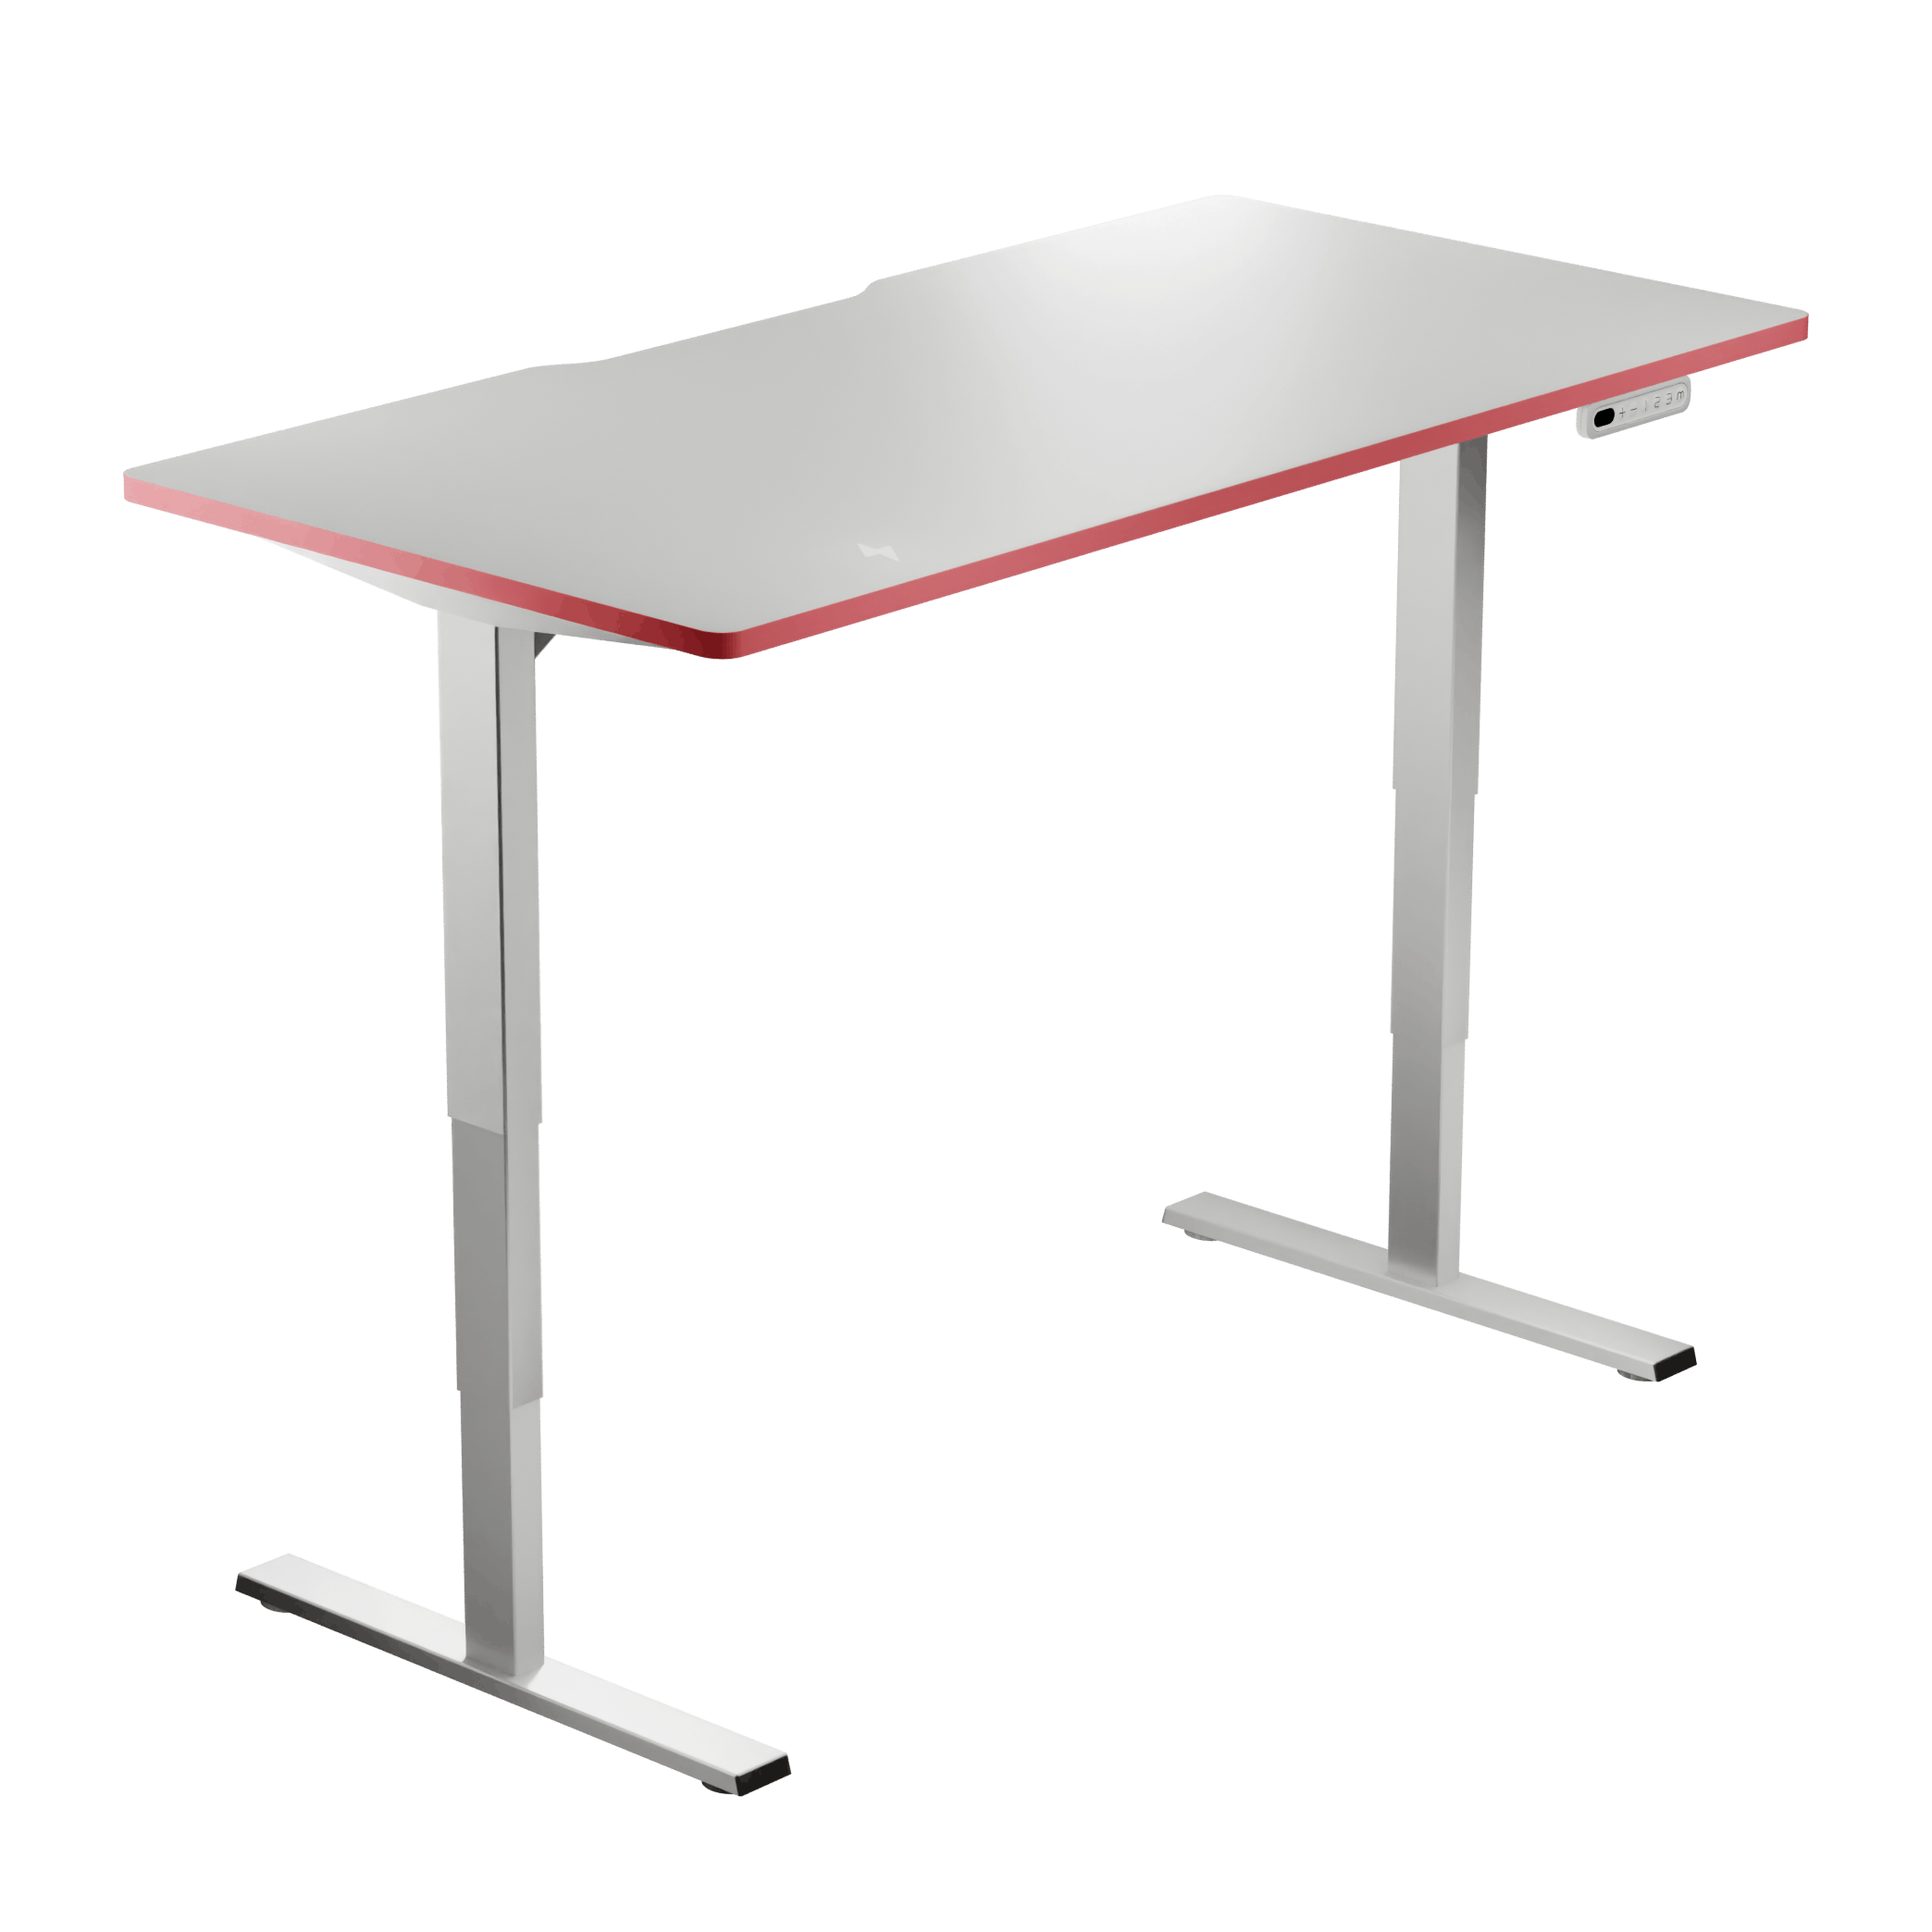 computer desks from leetdesk are ergonomic thanks to stepless height-adjustability